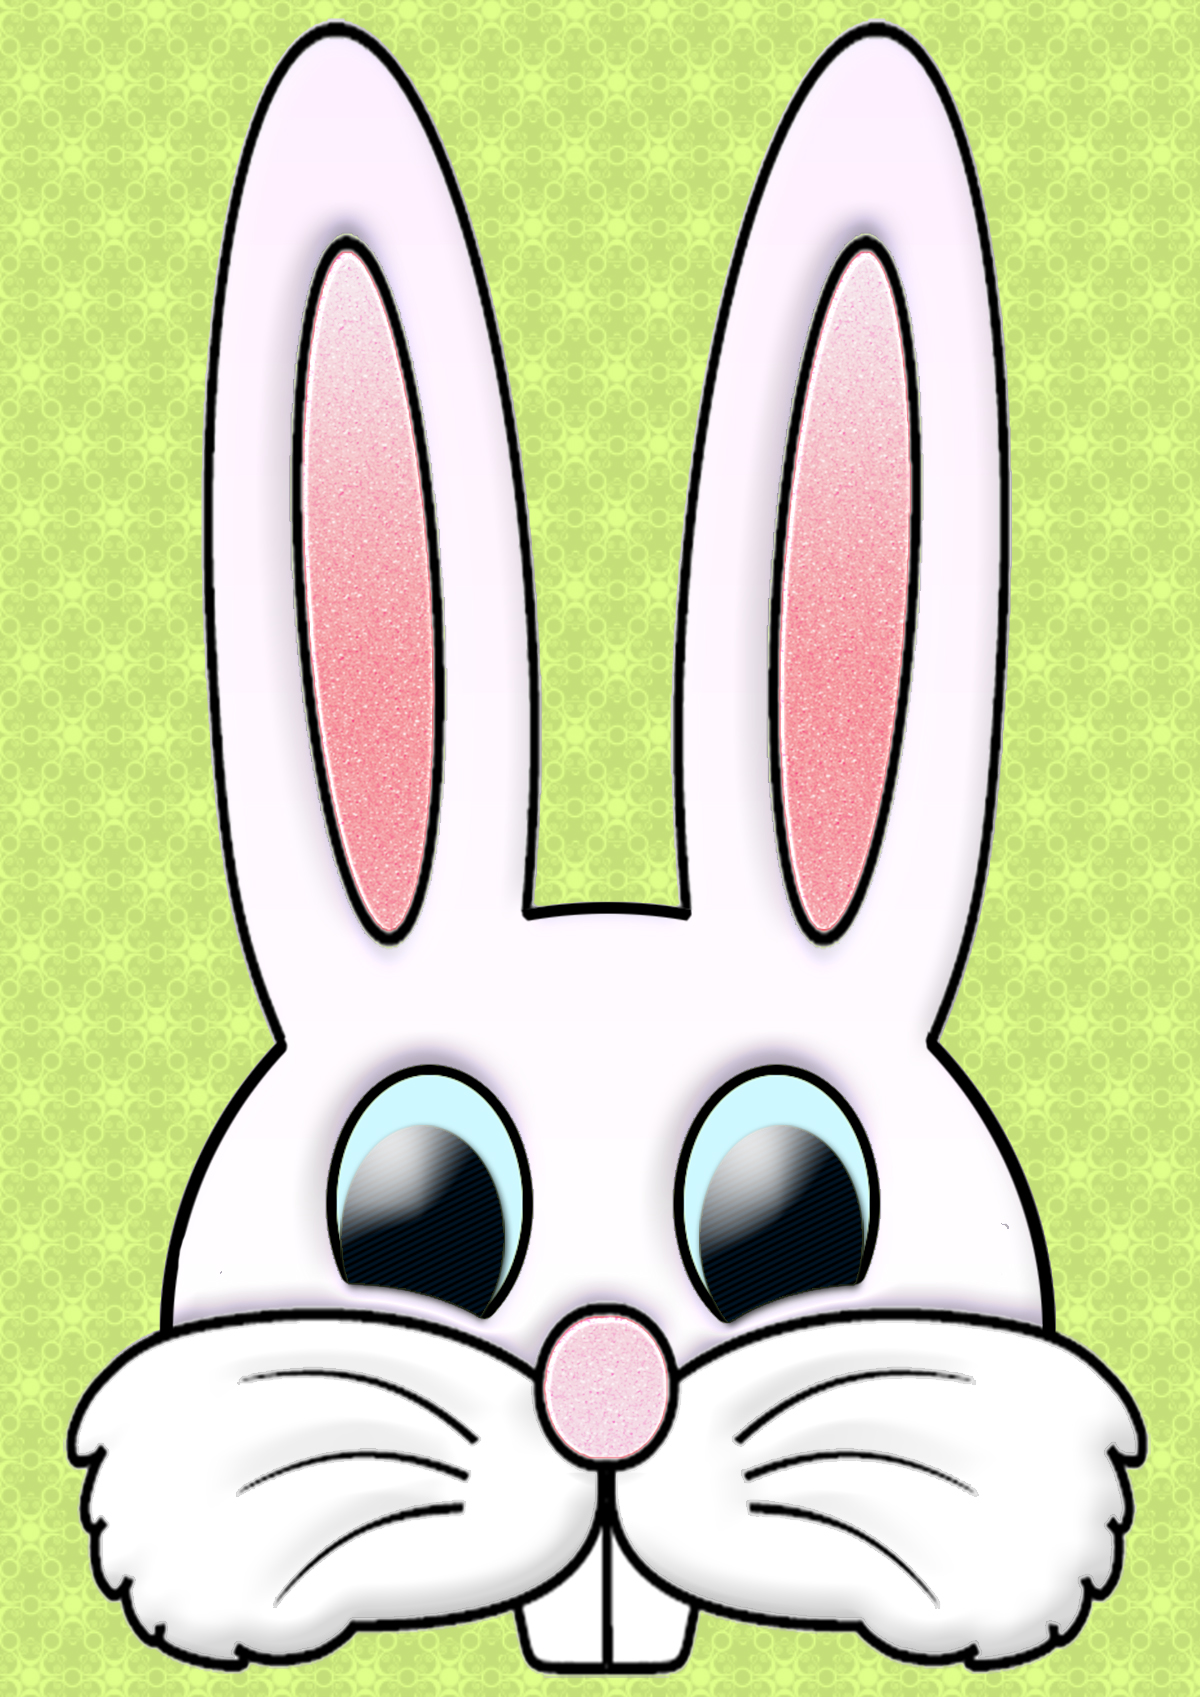 Best Photos of Easter Bunny Face - Cartoon Easter Bunny Face ...